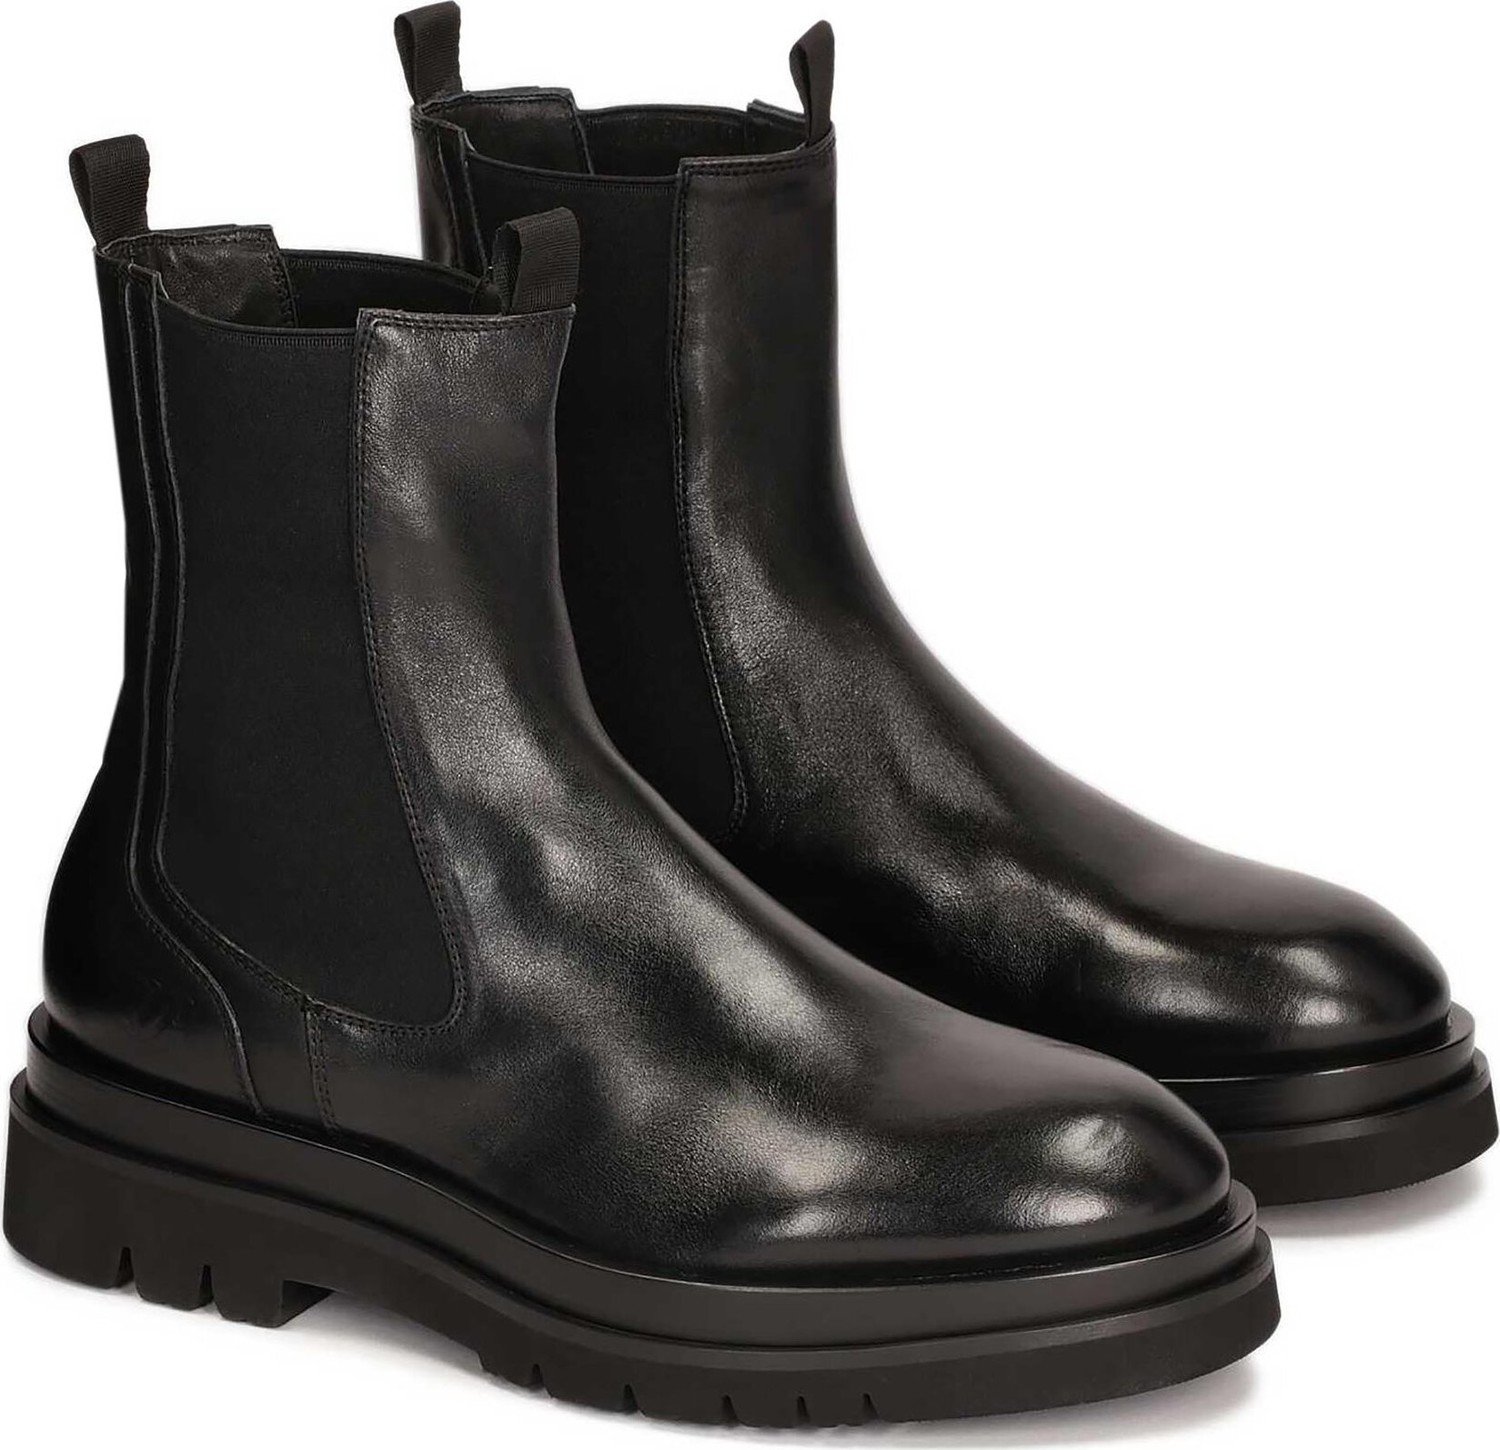 Kotníková obuv s elastickým prvkem Kazar Studio Hansel 84707-01-00 Black